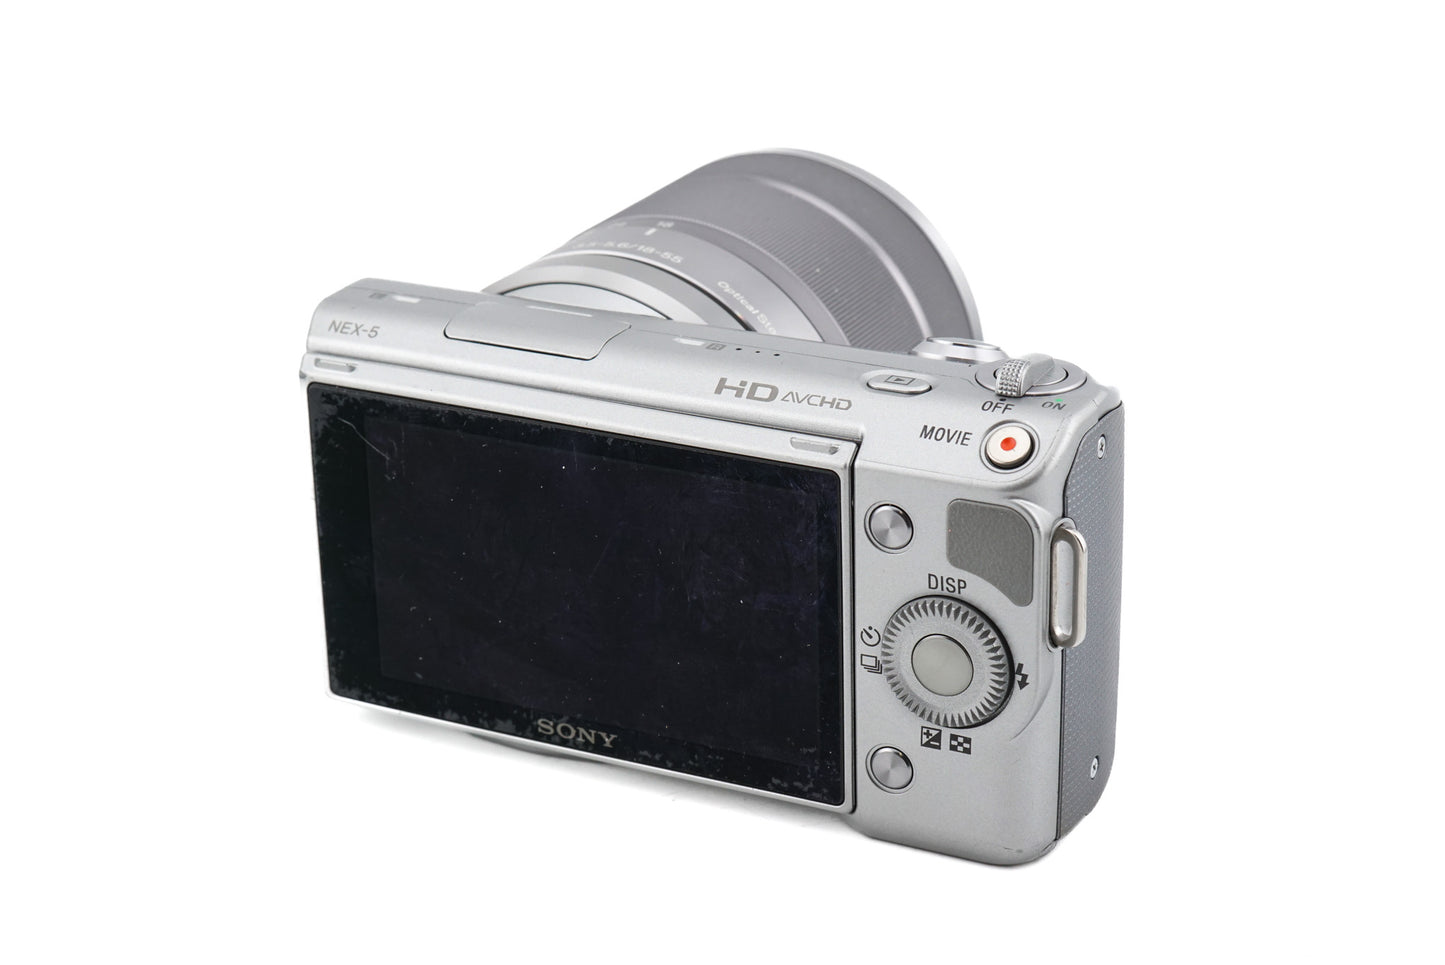 Sony NEX-5 + 18-55mm f3.5-5.6 OSS + HVL-F7S Flash